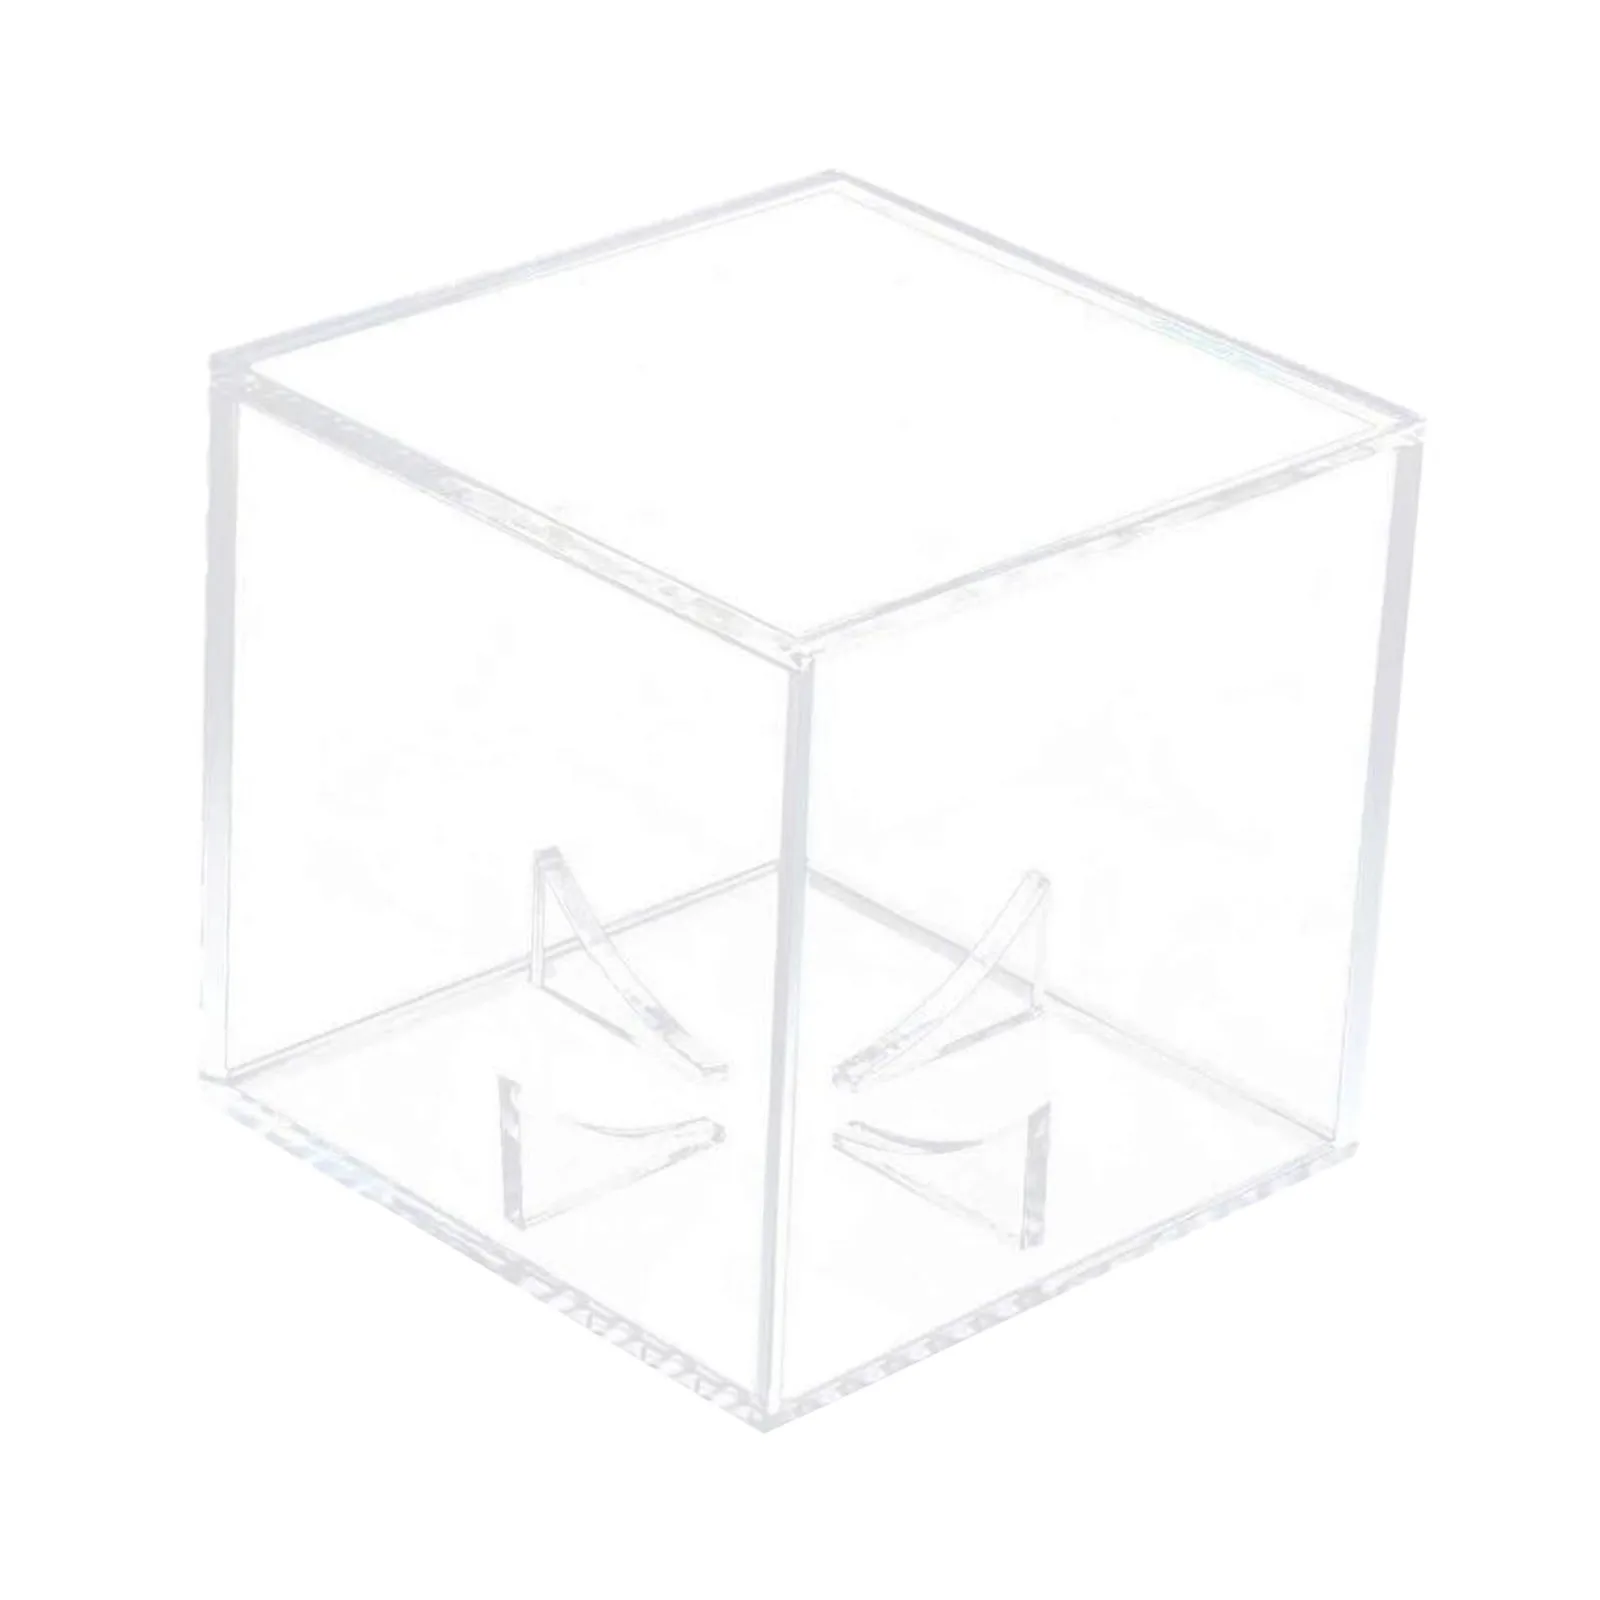 Baseball Display Case Transparent Case Detachable Square Box 8x8x8cm